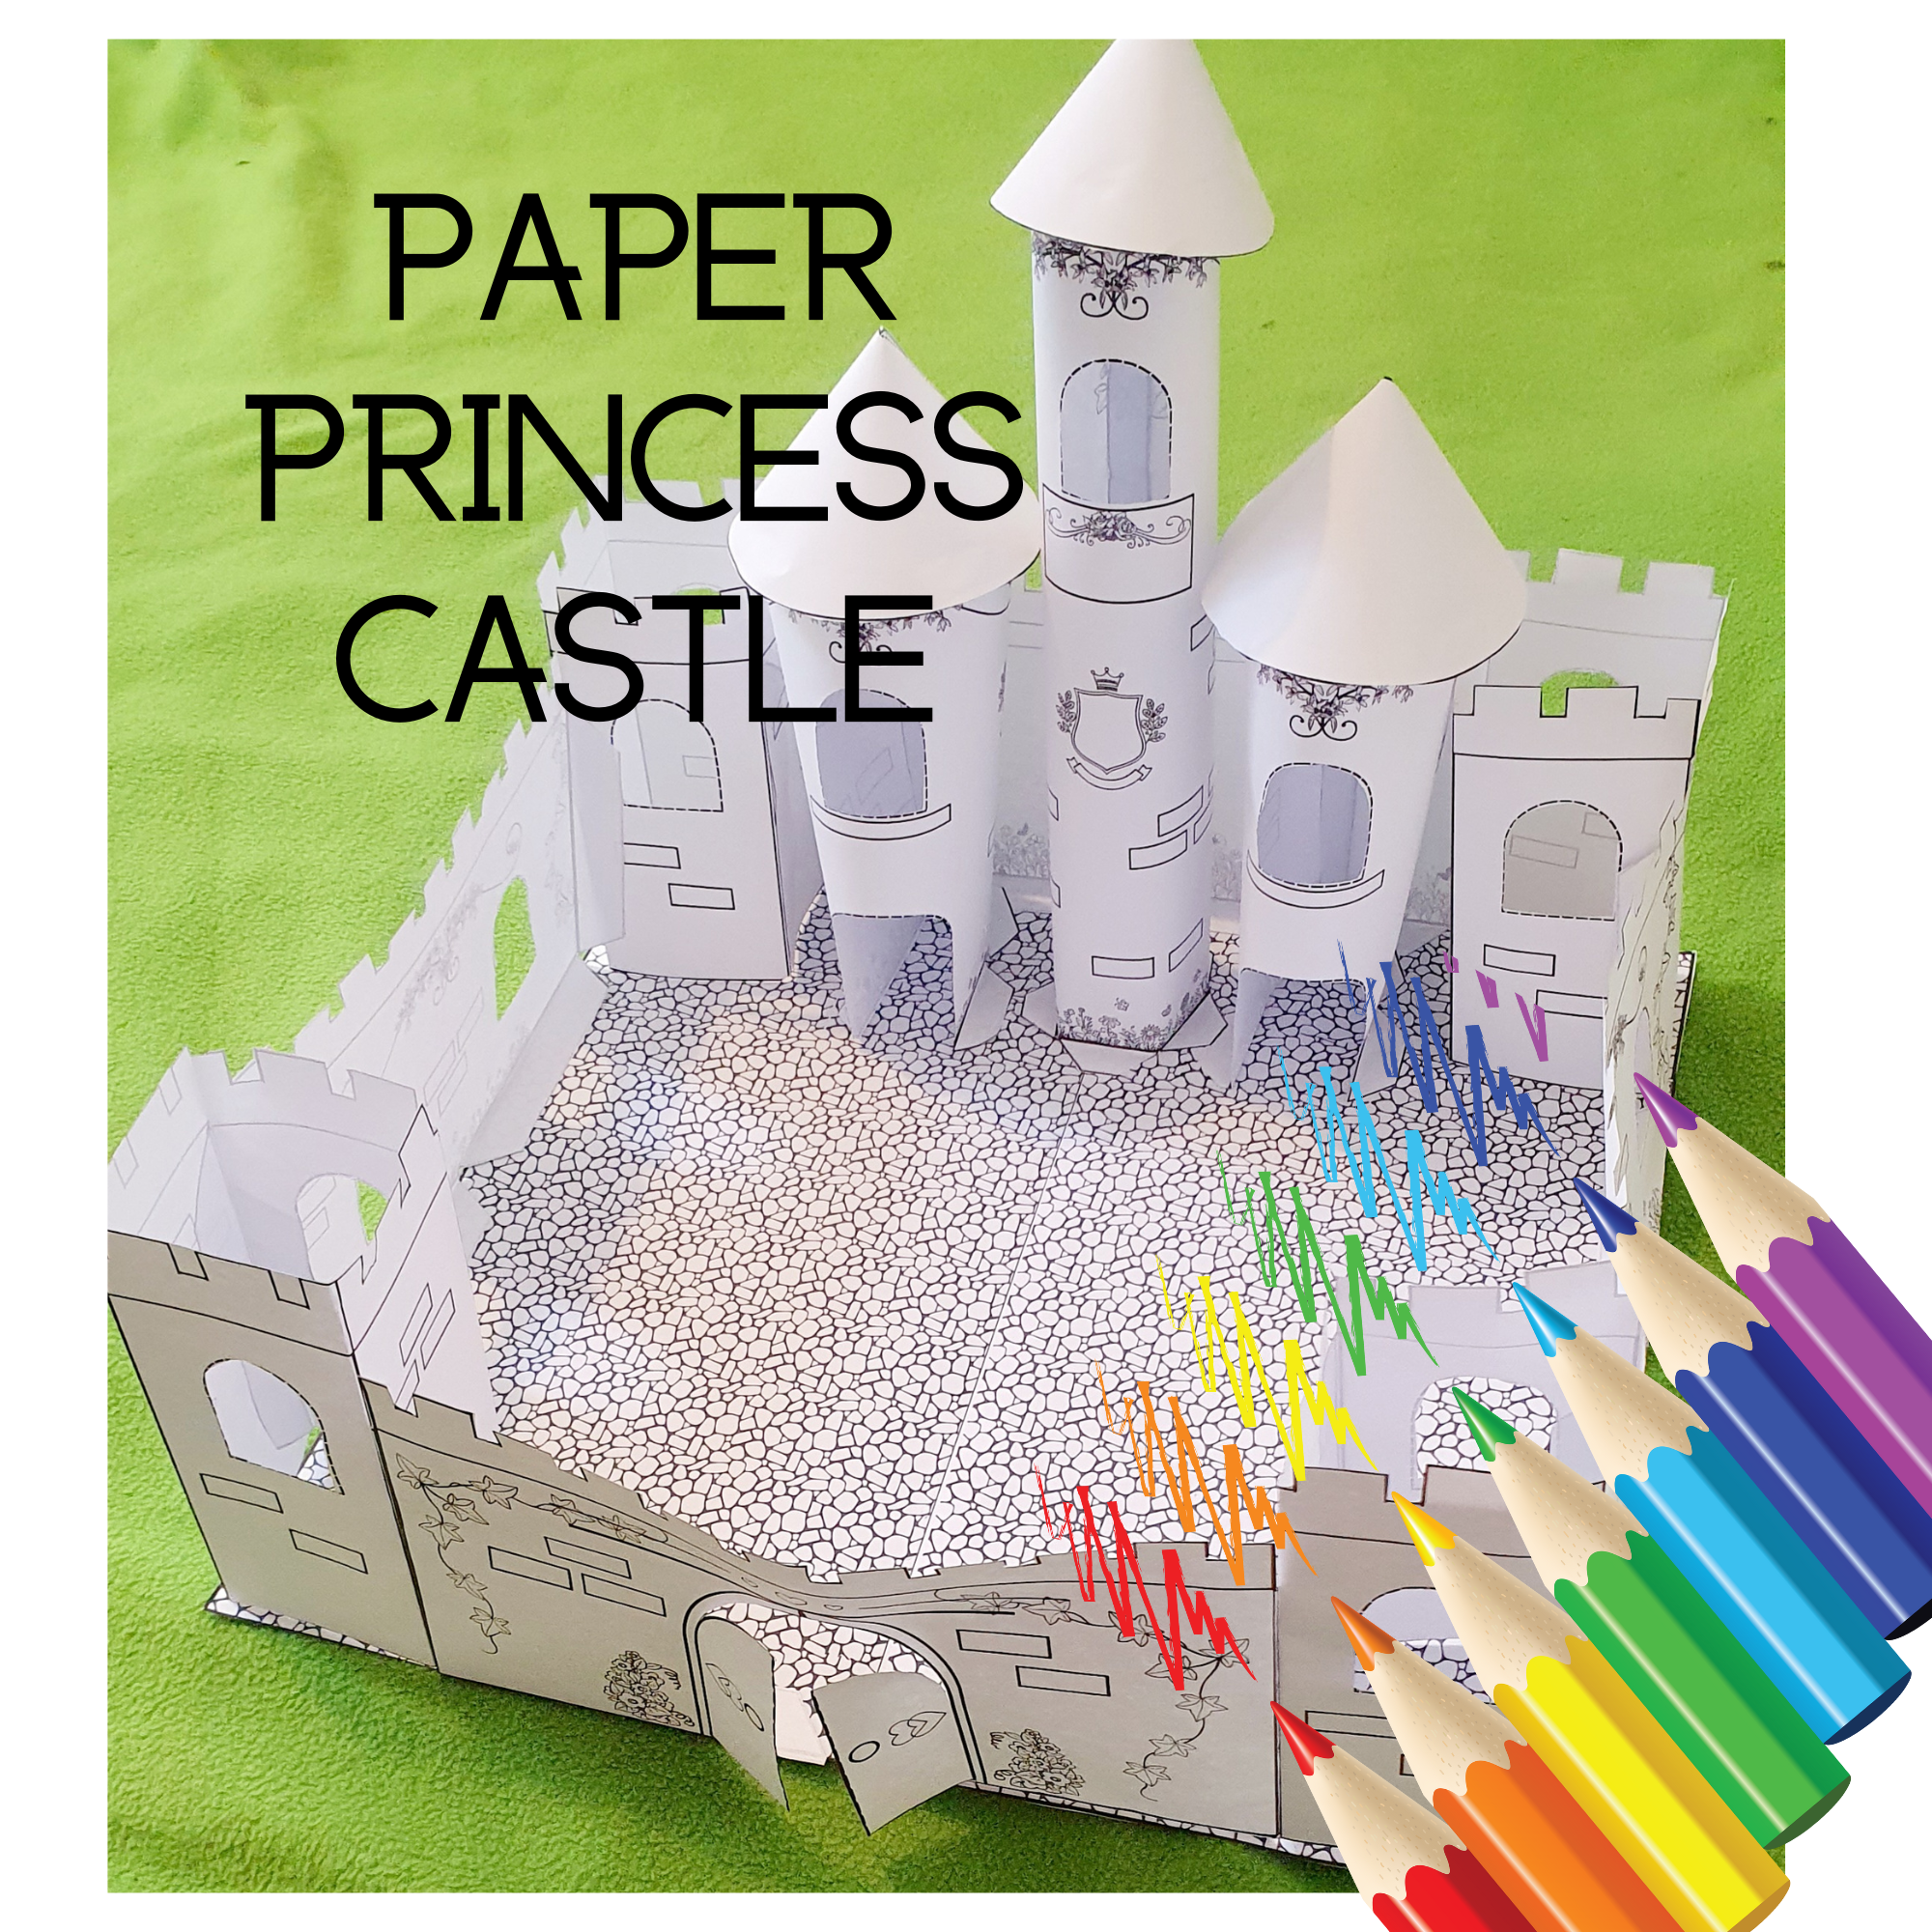 How To Make a Paper Princess Castle